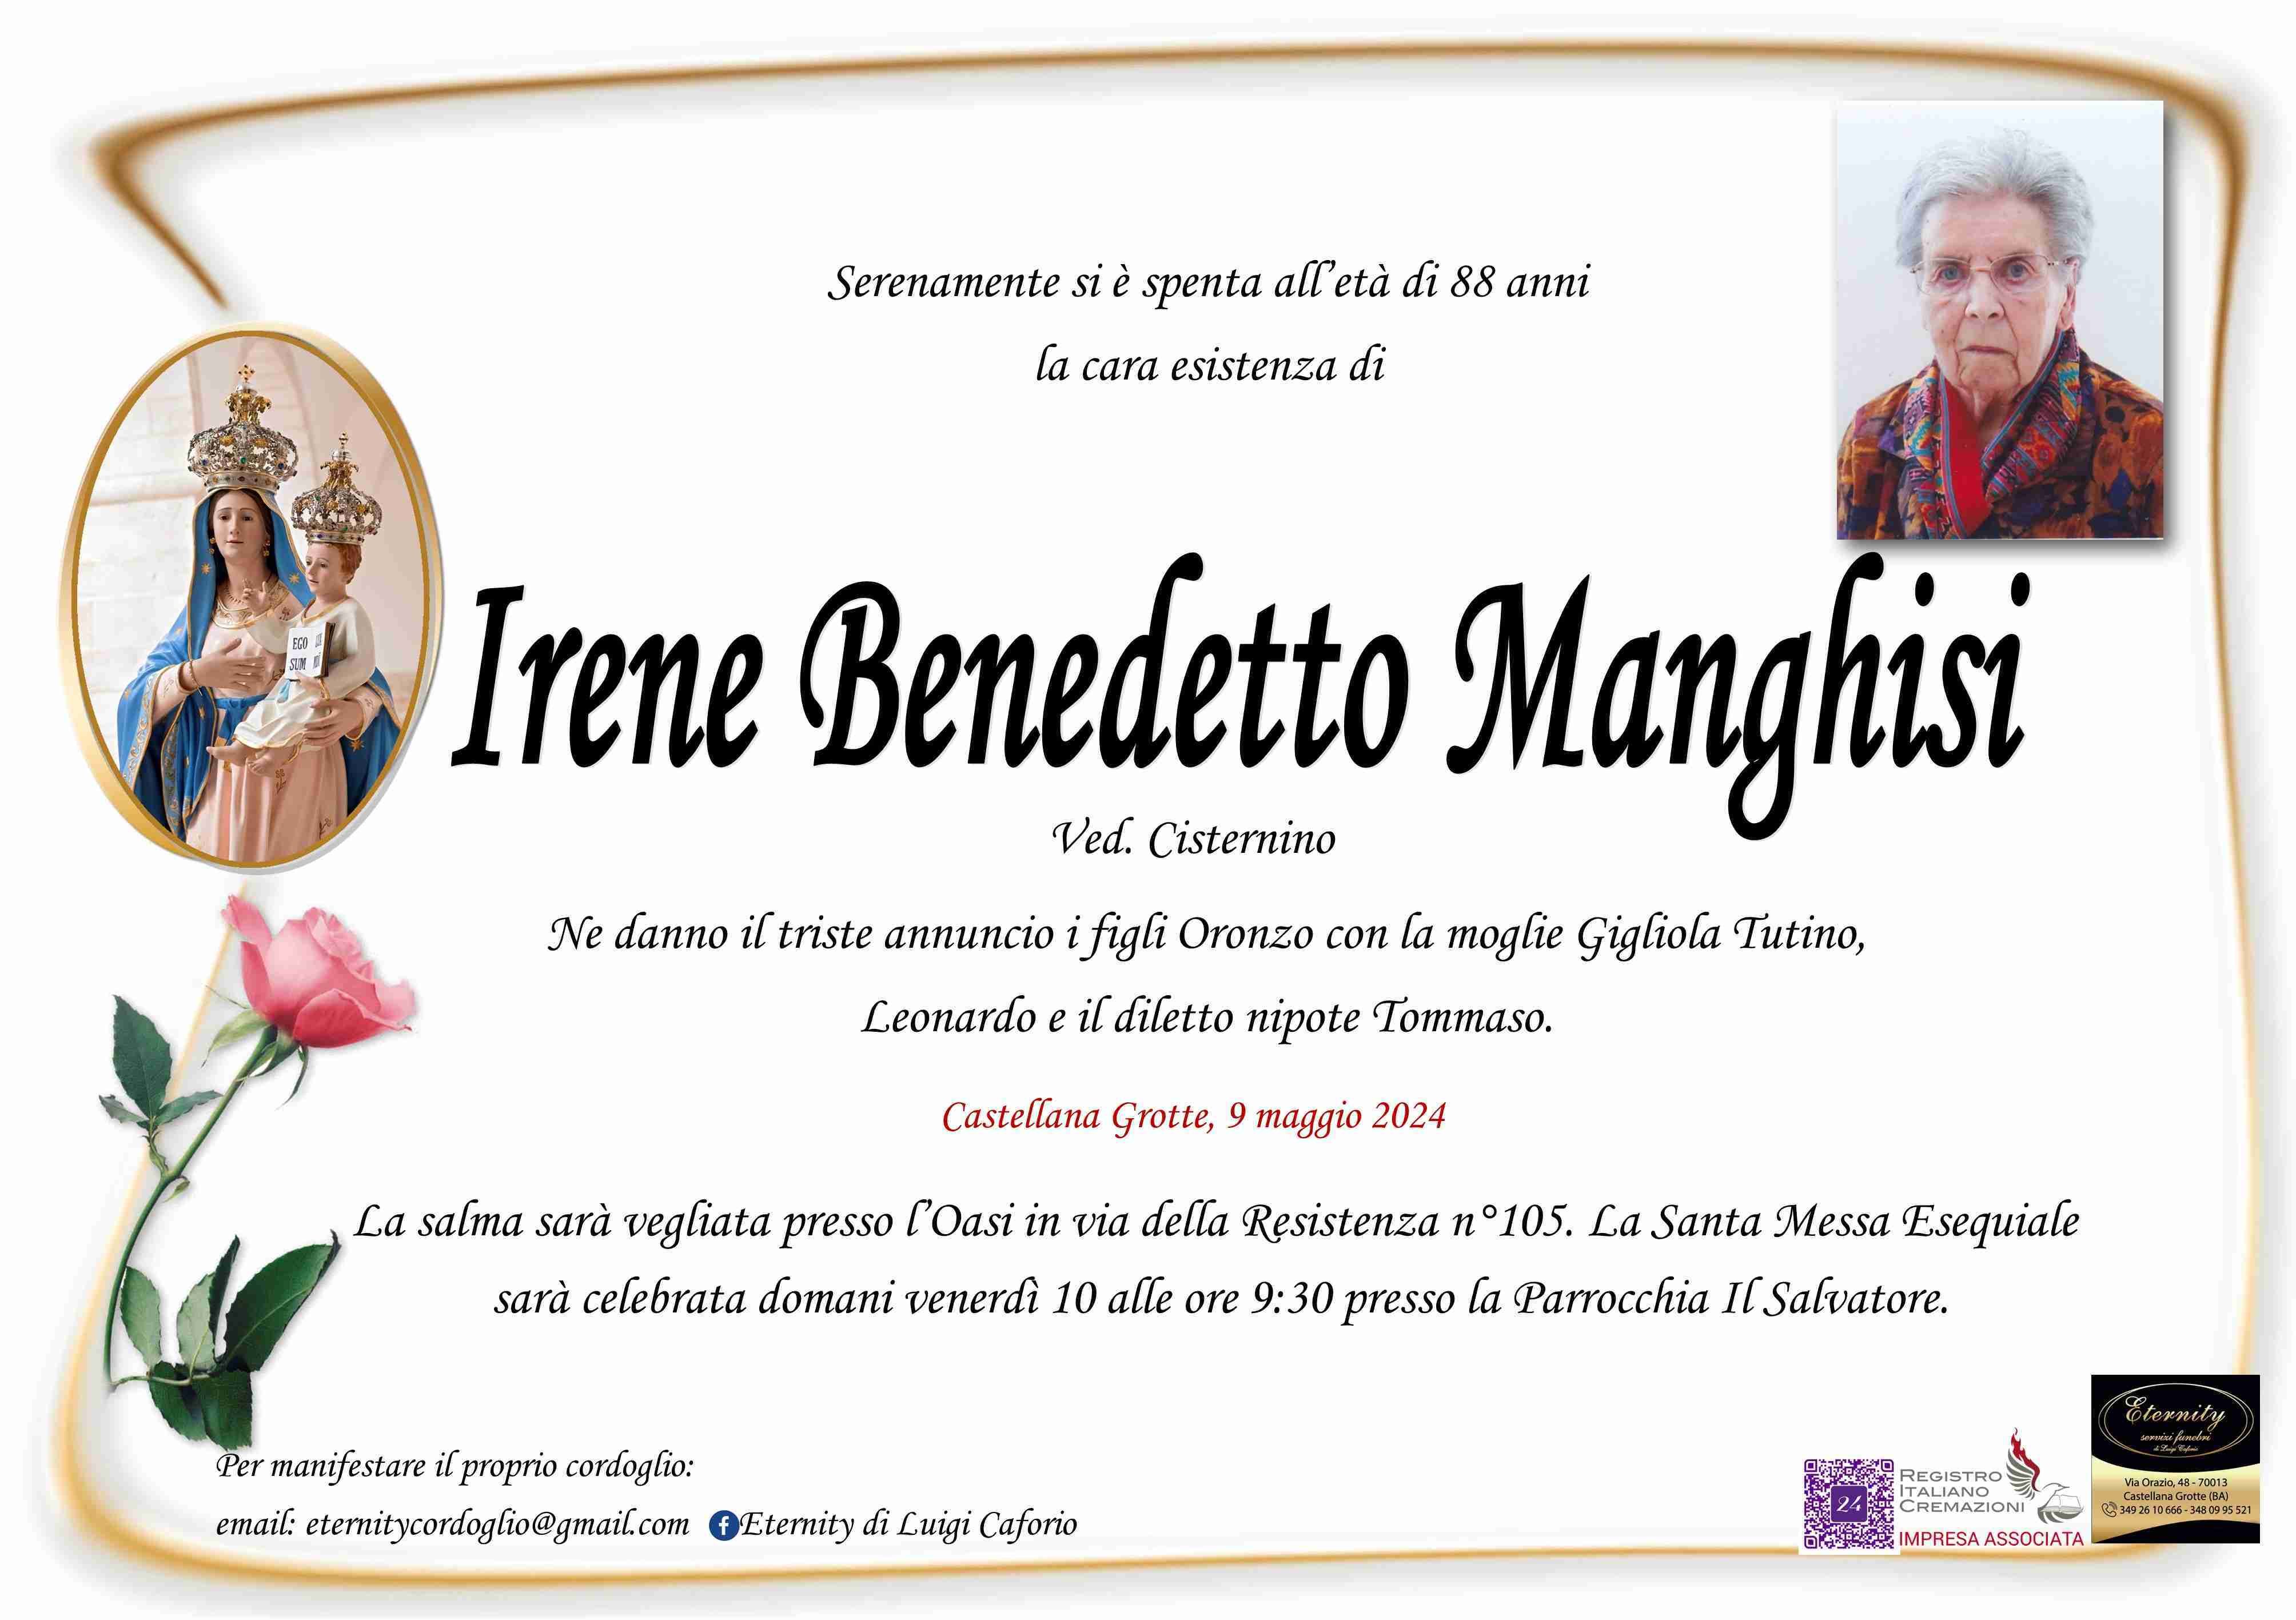 Irene Benedetto Manghisi